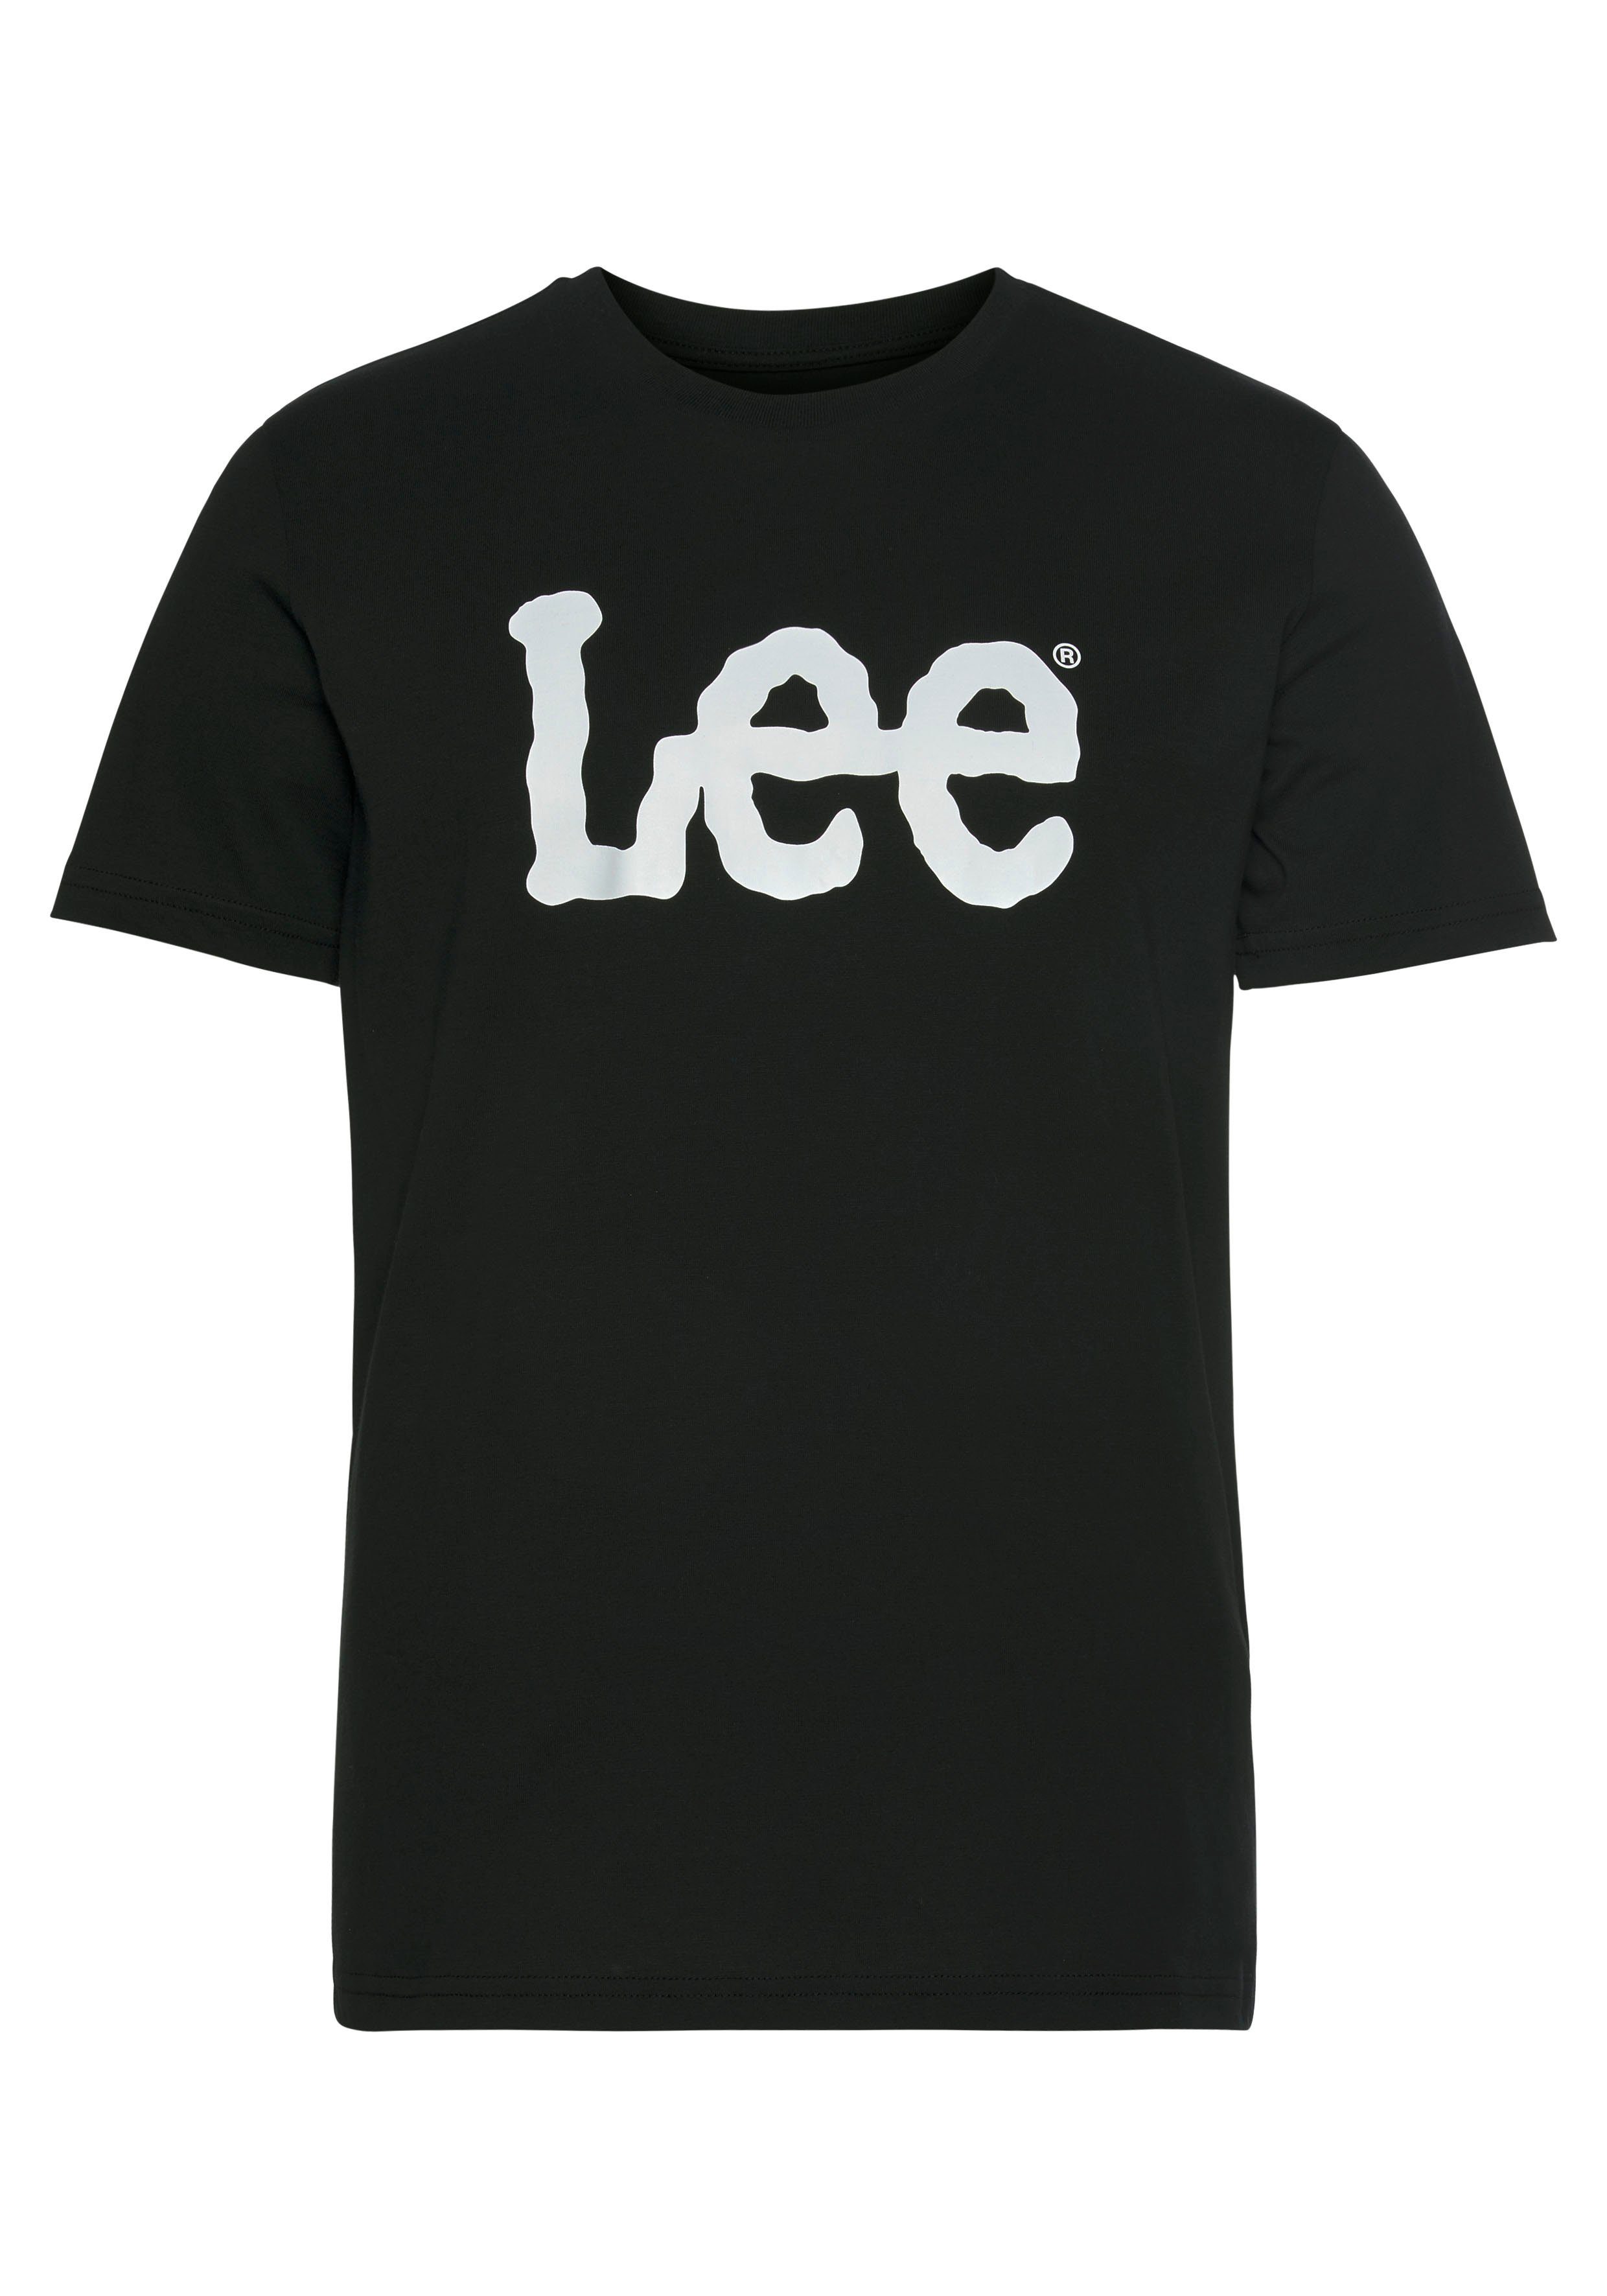 Wobbly Lee® T-Shirt LOGO TEE black